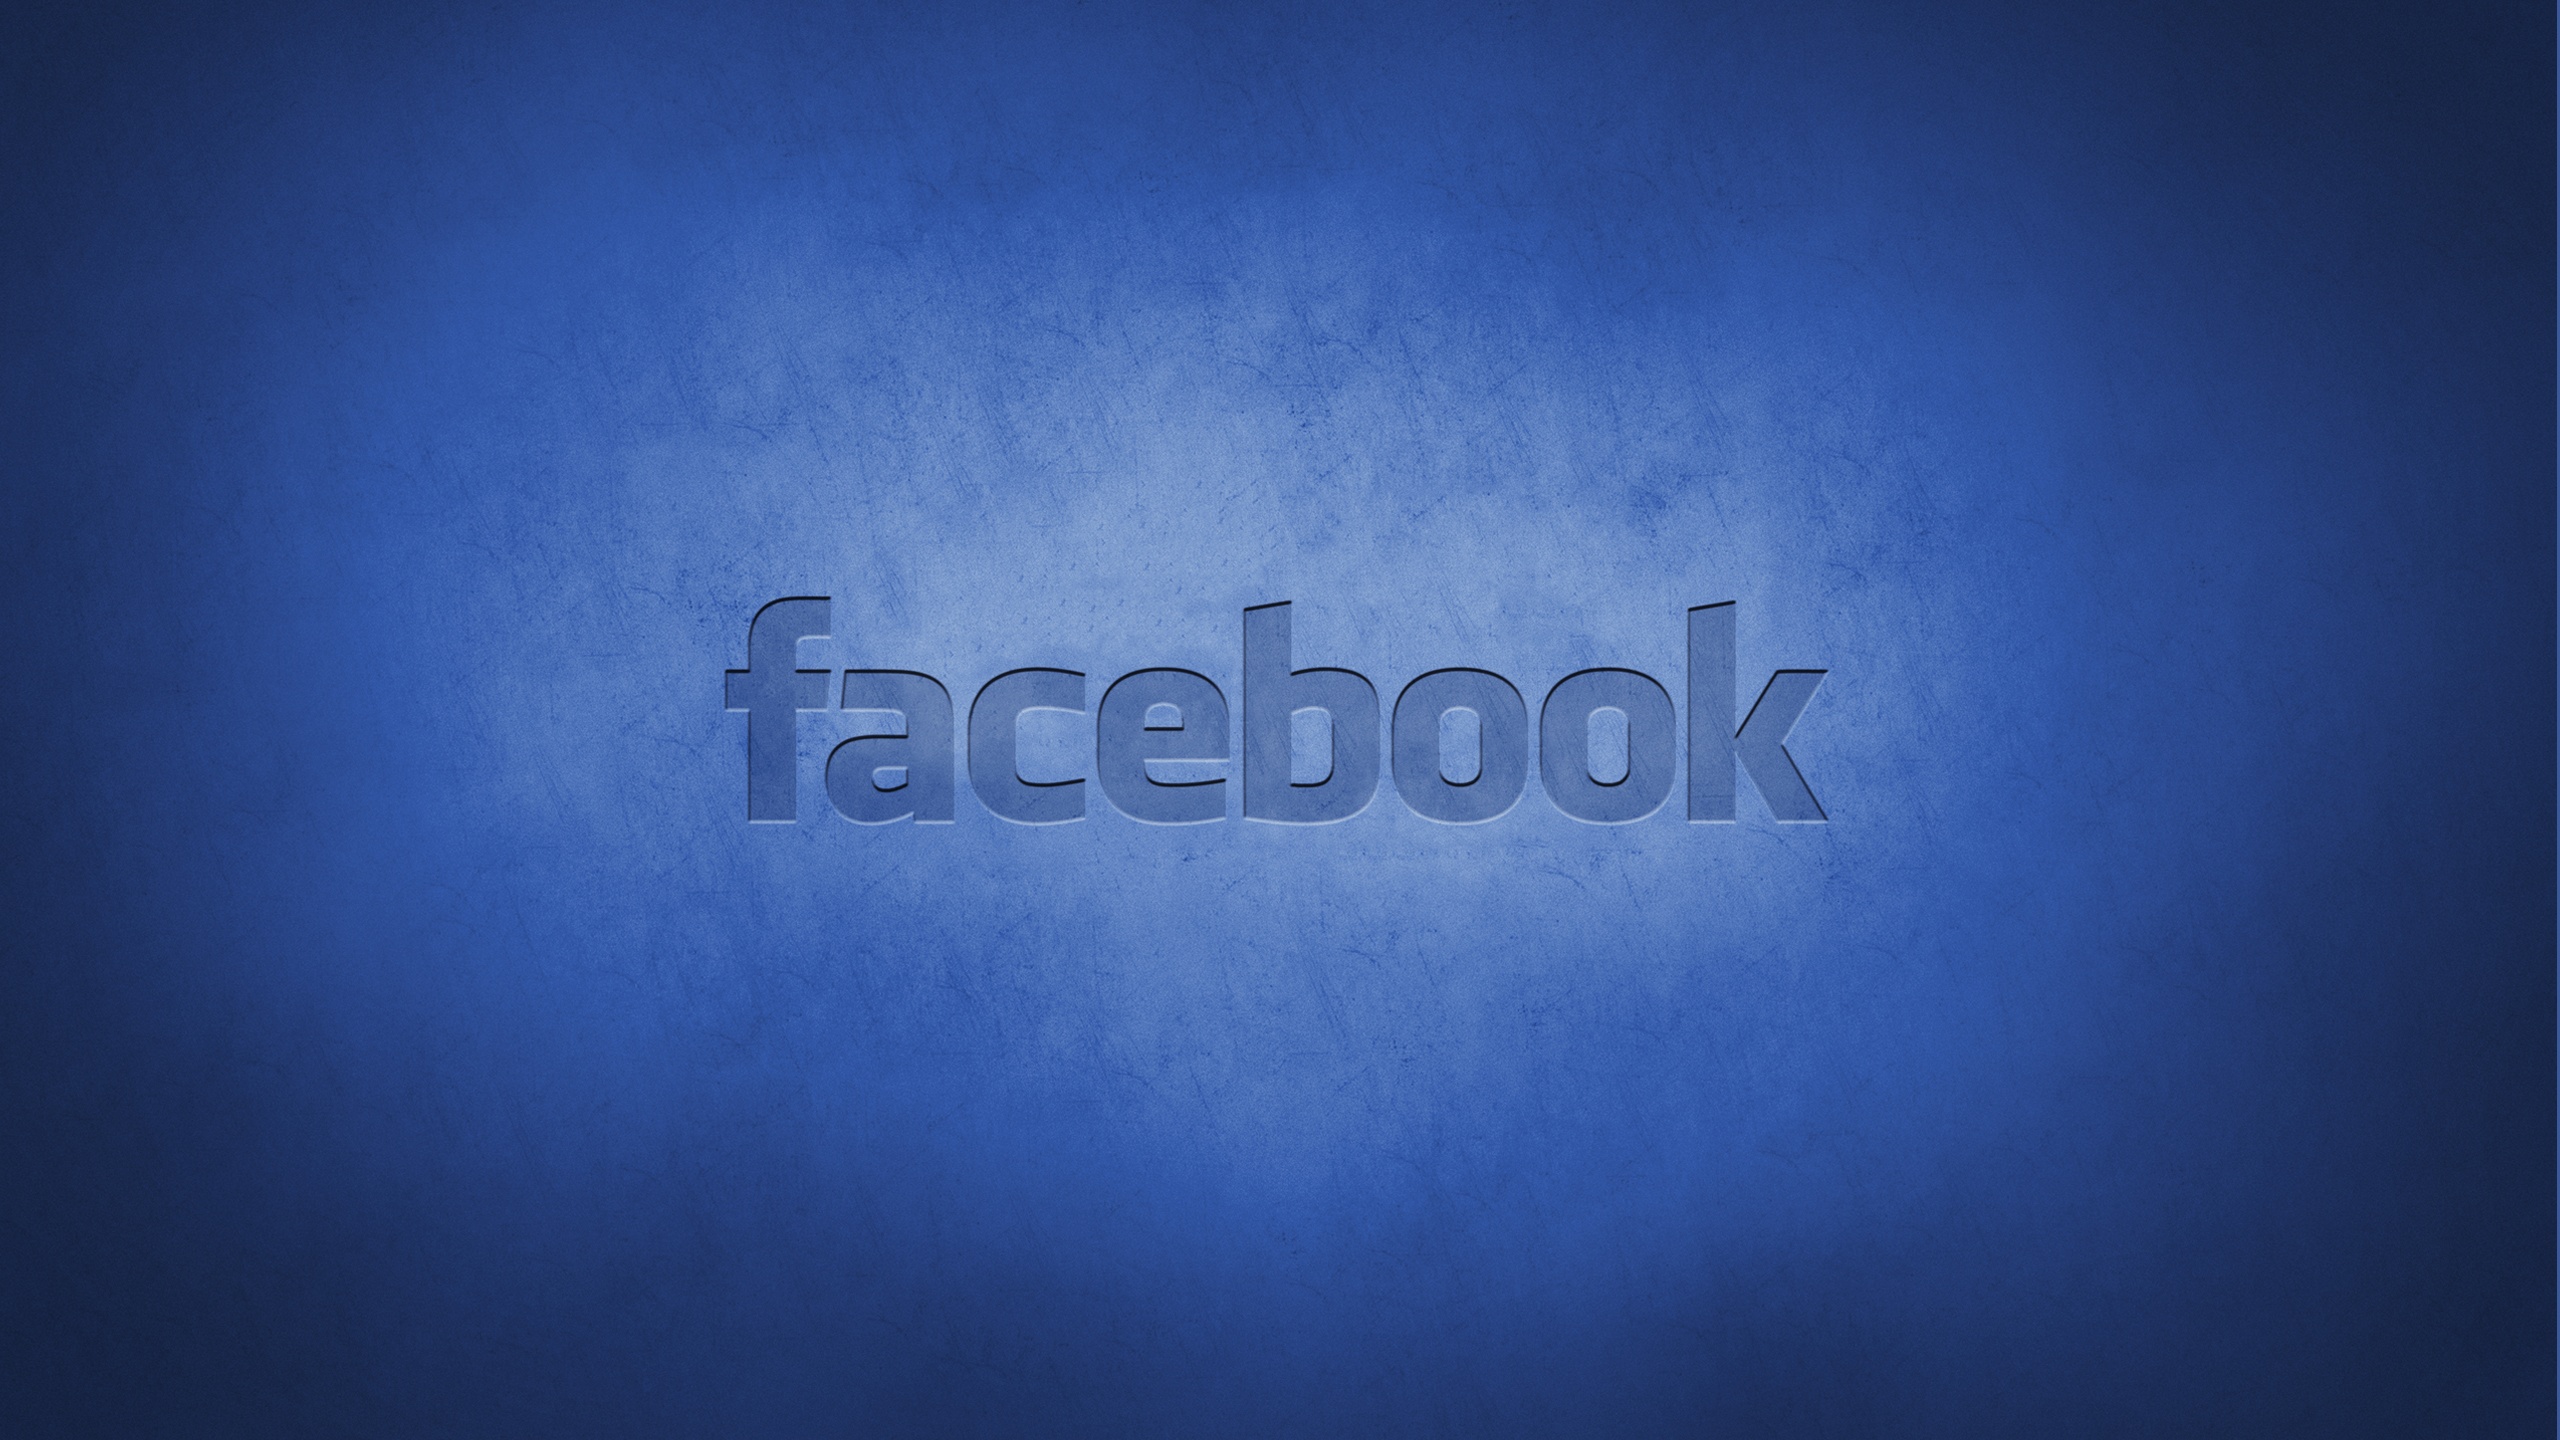 facebook wallpaper download,blue,text,sky,font,logo